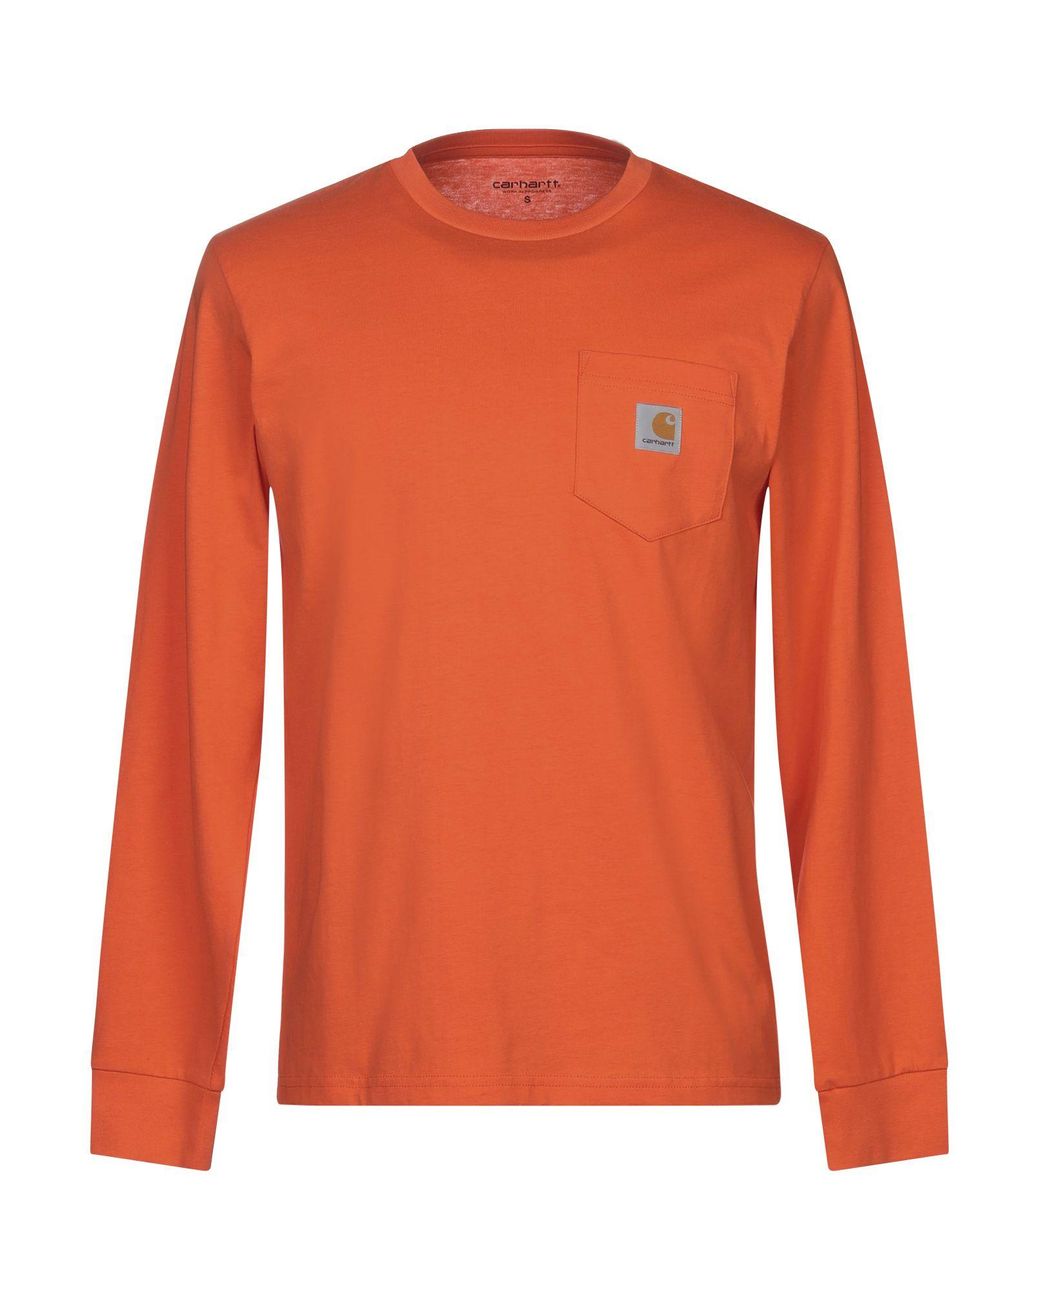 Carhartt Cotton T-shirt in Orange for Men - Lyst